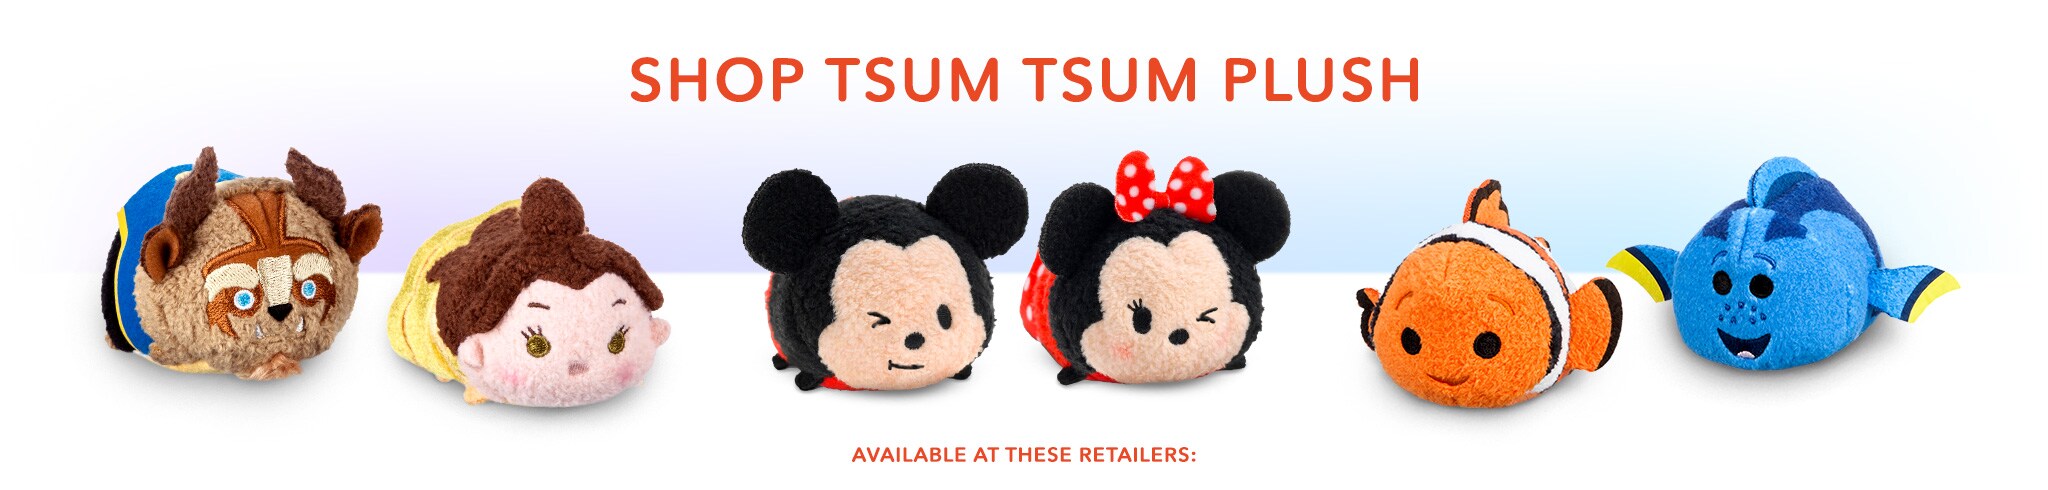 disney stuffed animals tsum tsum